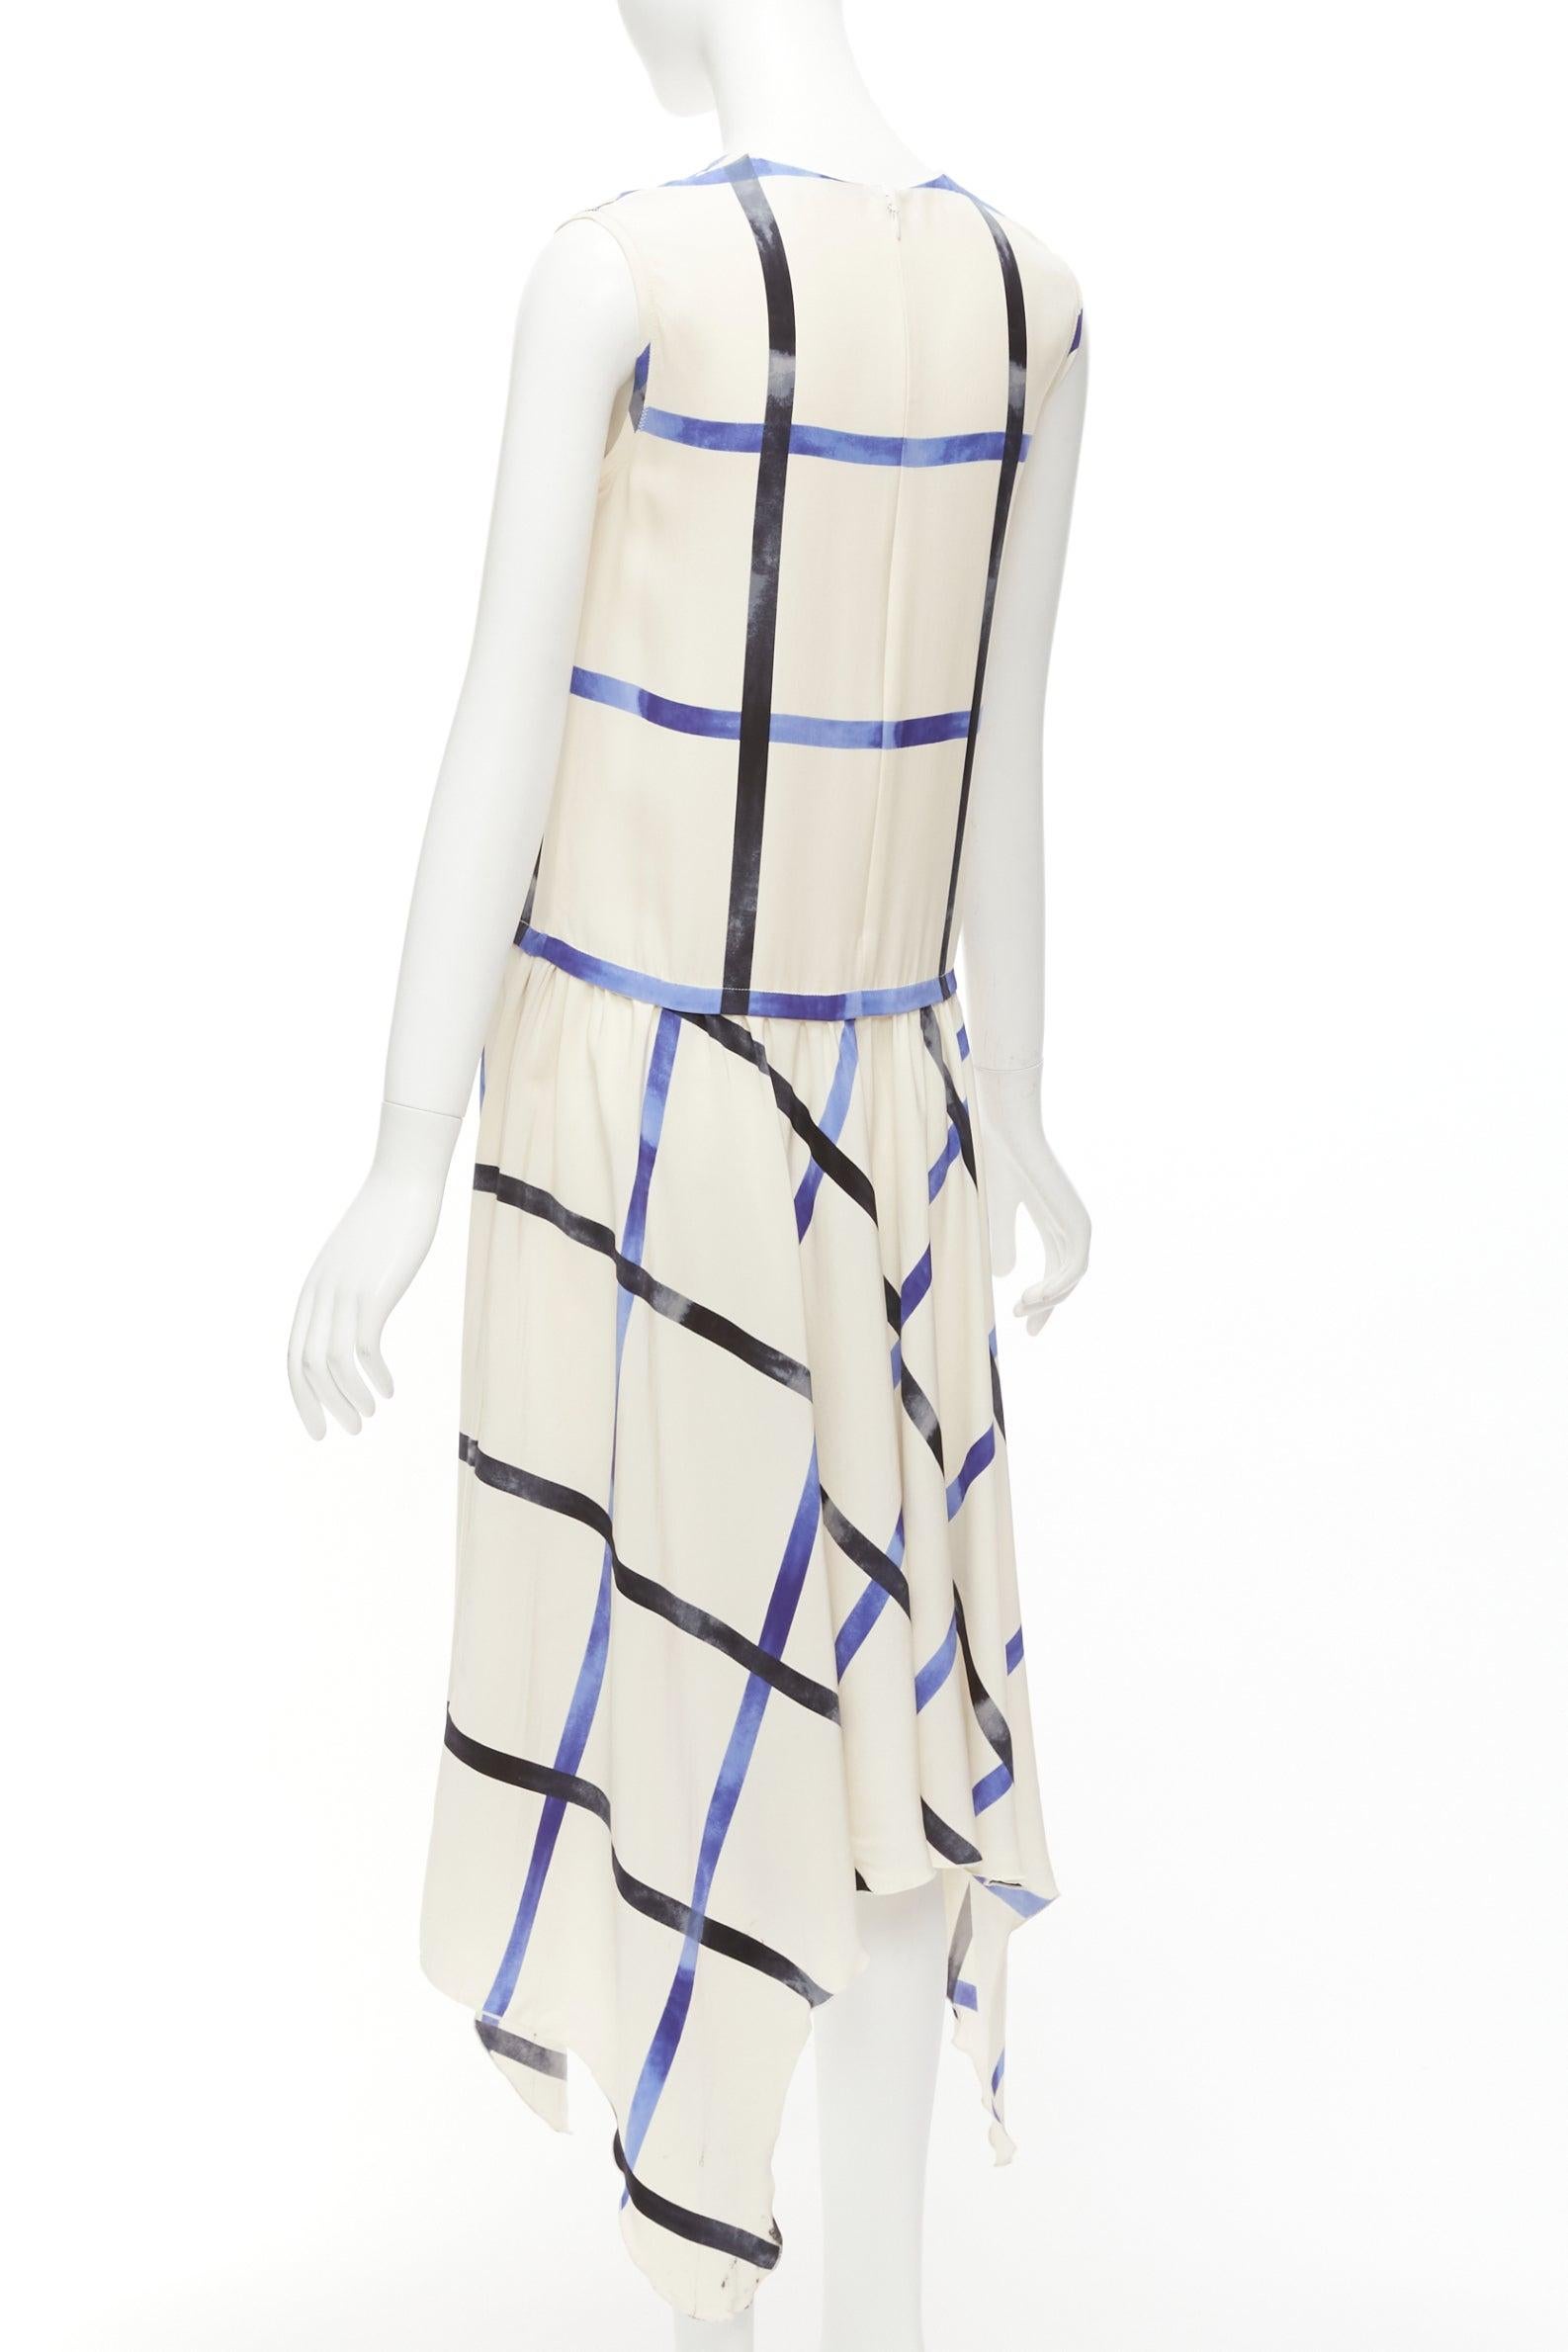 CELINE Phoebe Philo 2014 Runway cream blue 100% silk bias cut dress For Sale 2